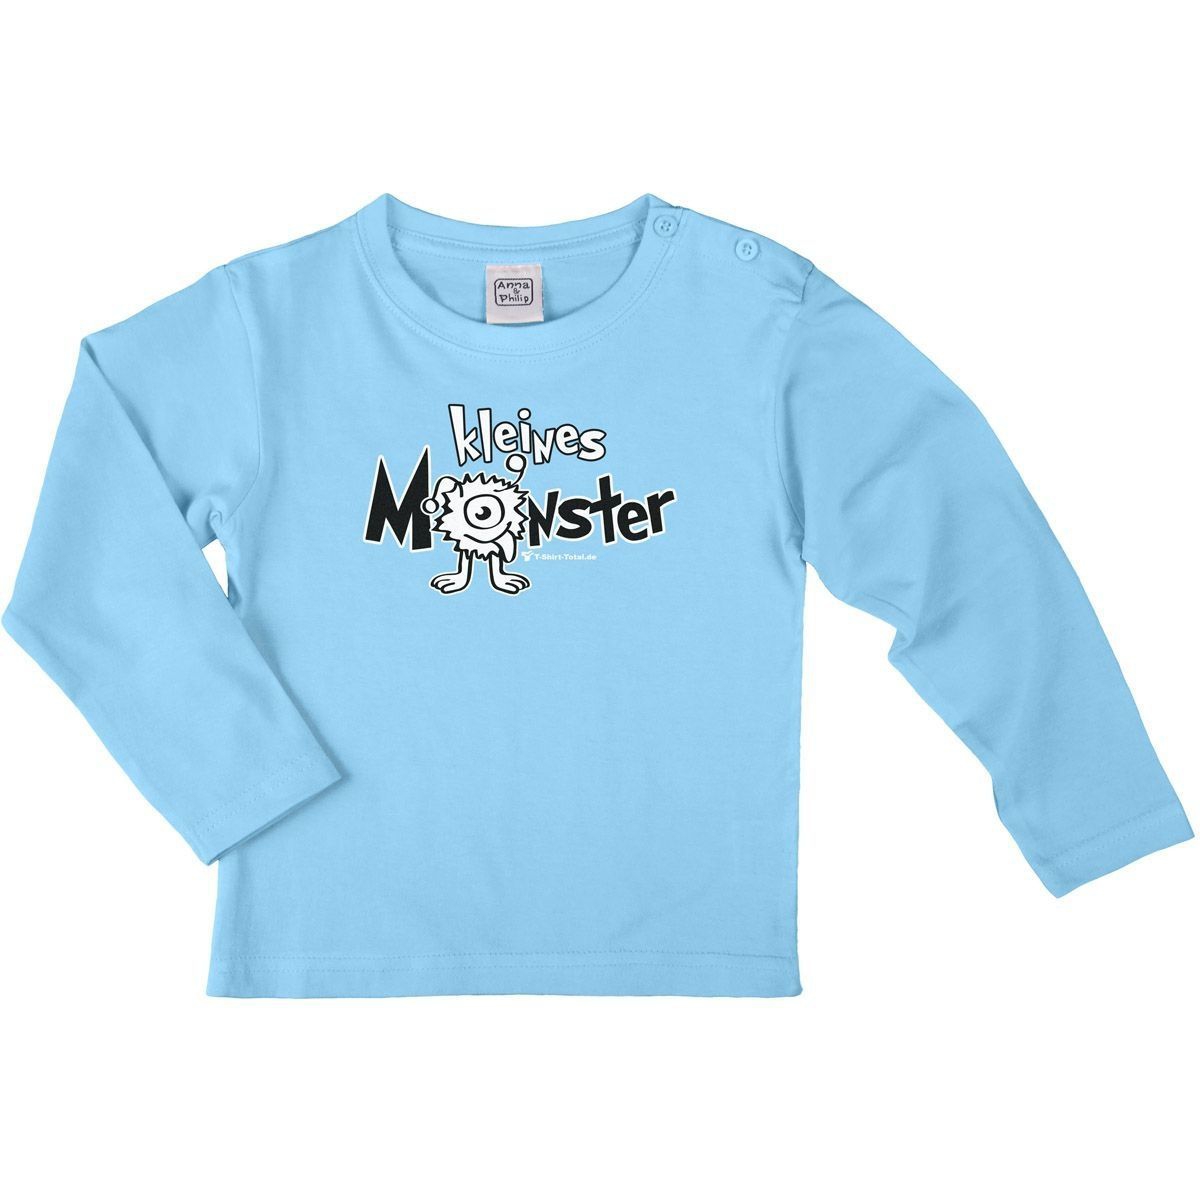 Kleines Monster Kinder Langarm Shirt hellblau 110 / 116